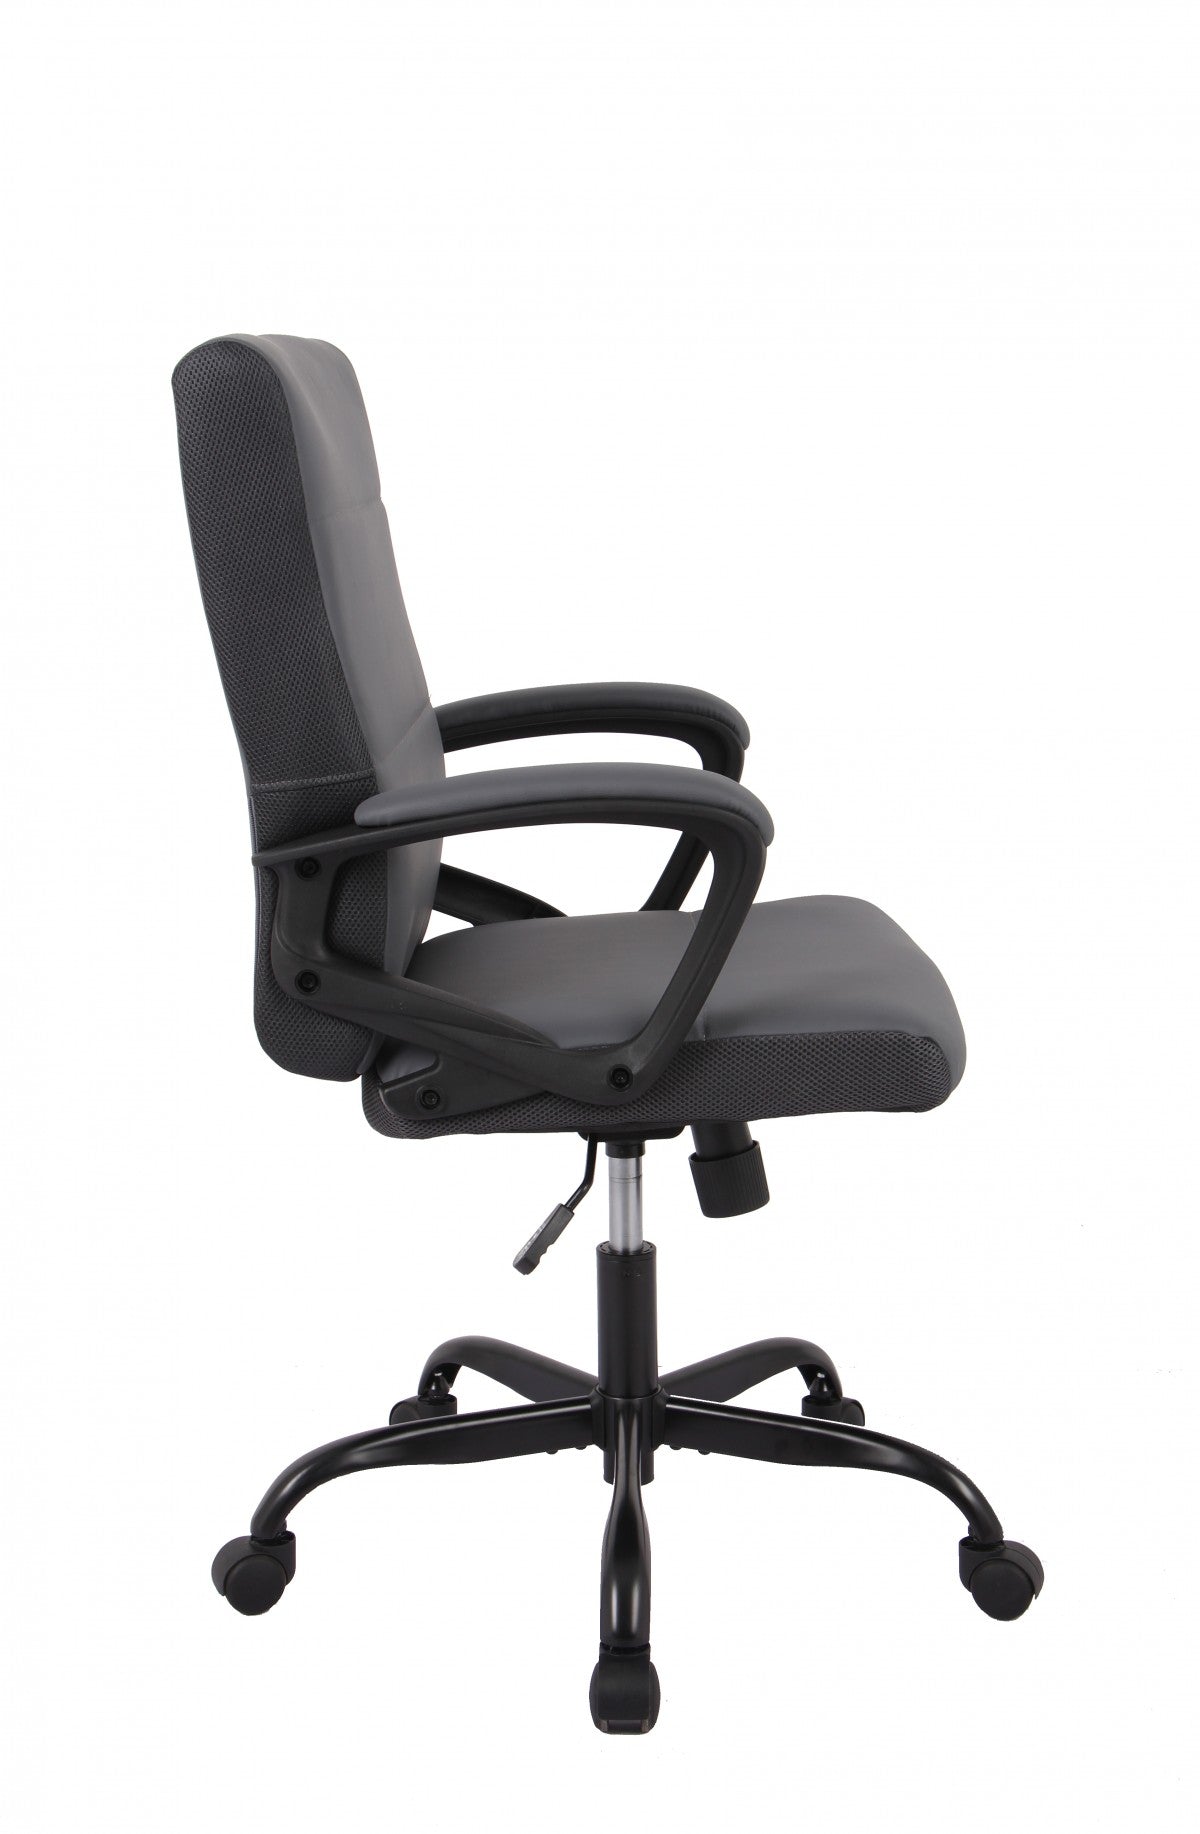 Grey Office Chair 2600-CHR